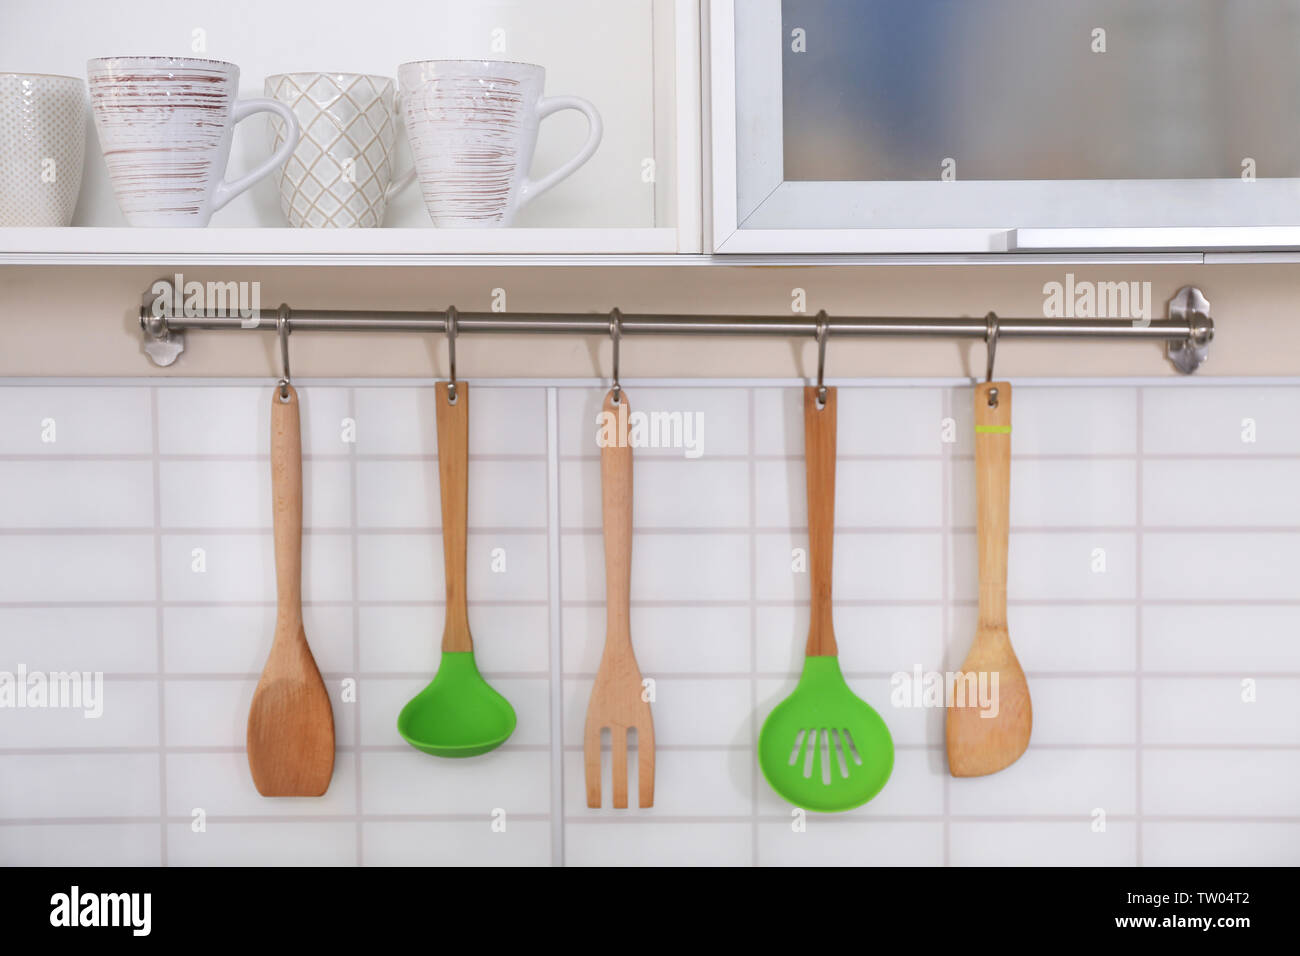 https://c8.alamy.com/comp/TW04T2/set-of-utensils-on-kitchen-TW04T2.jpg